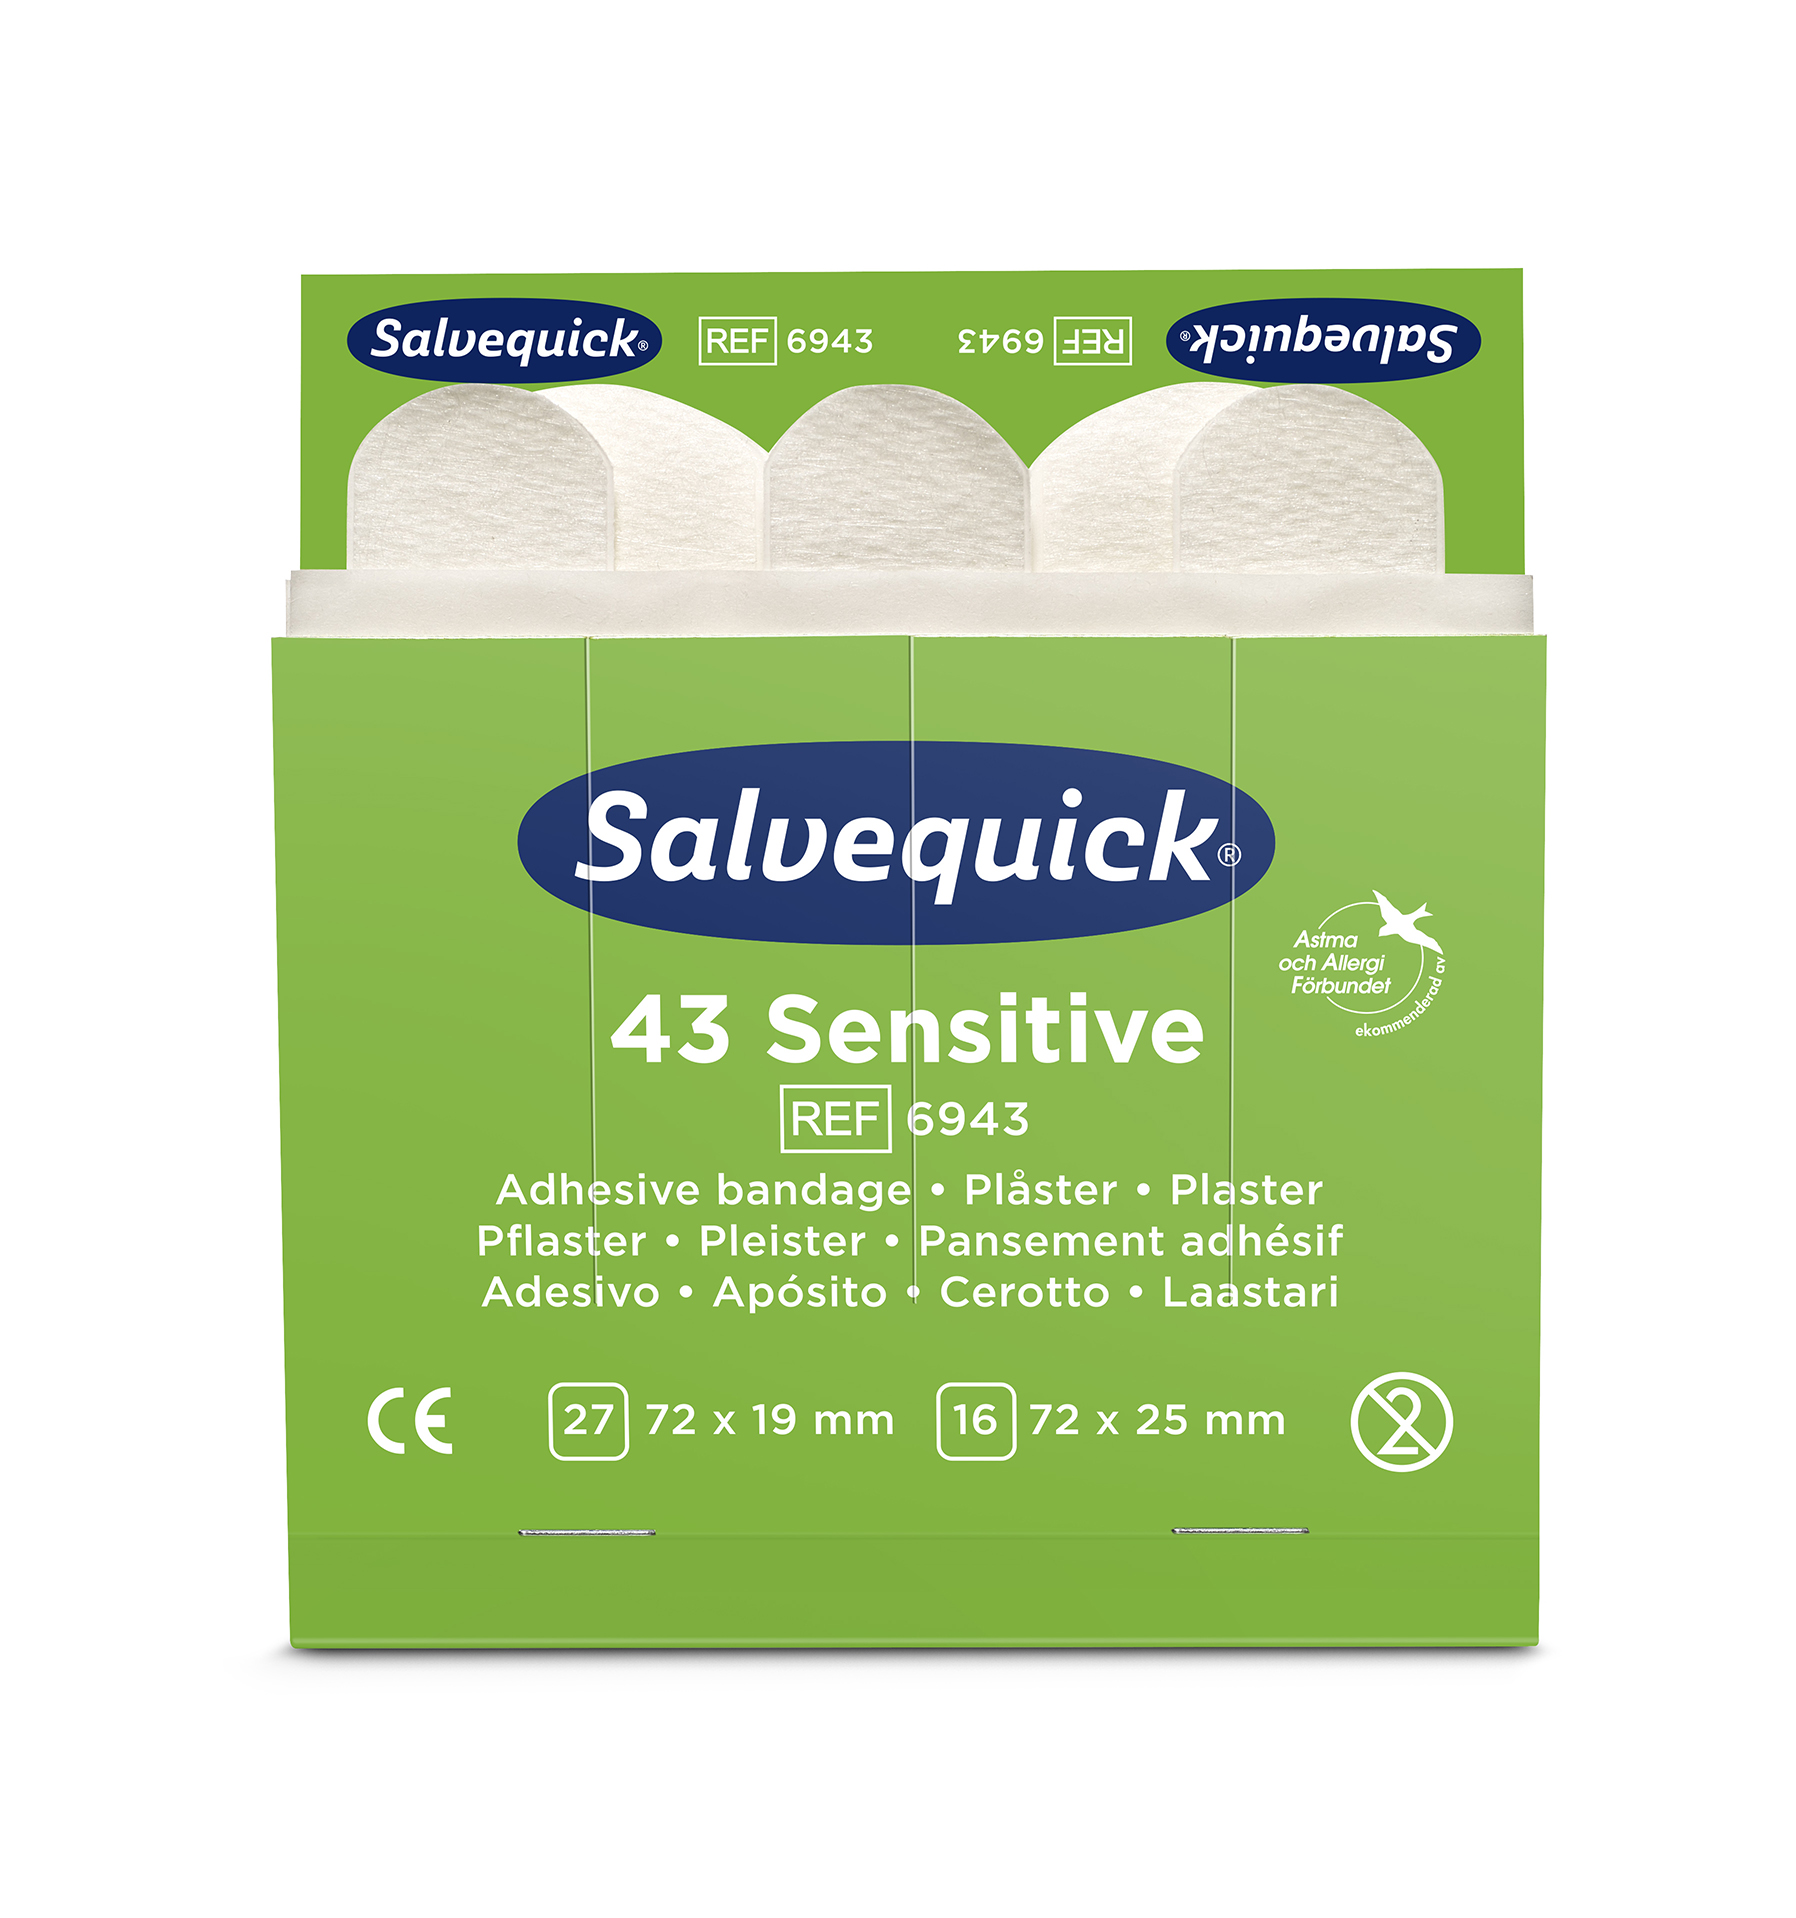 Salvequick Sensitive Pflaster - Refill 6943